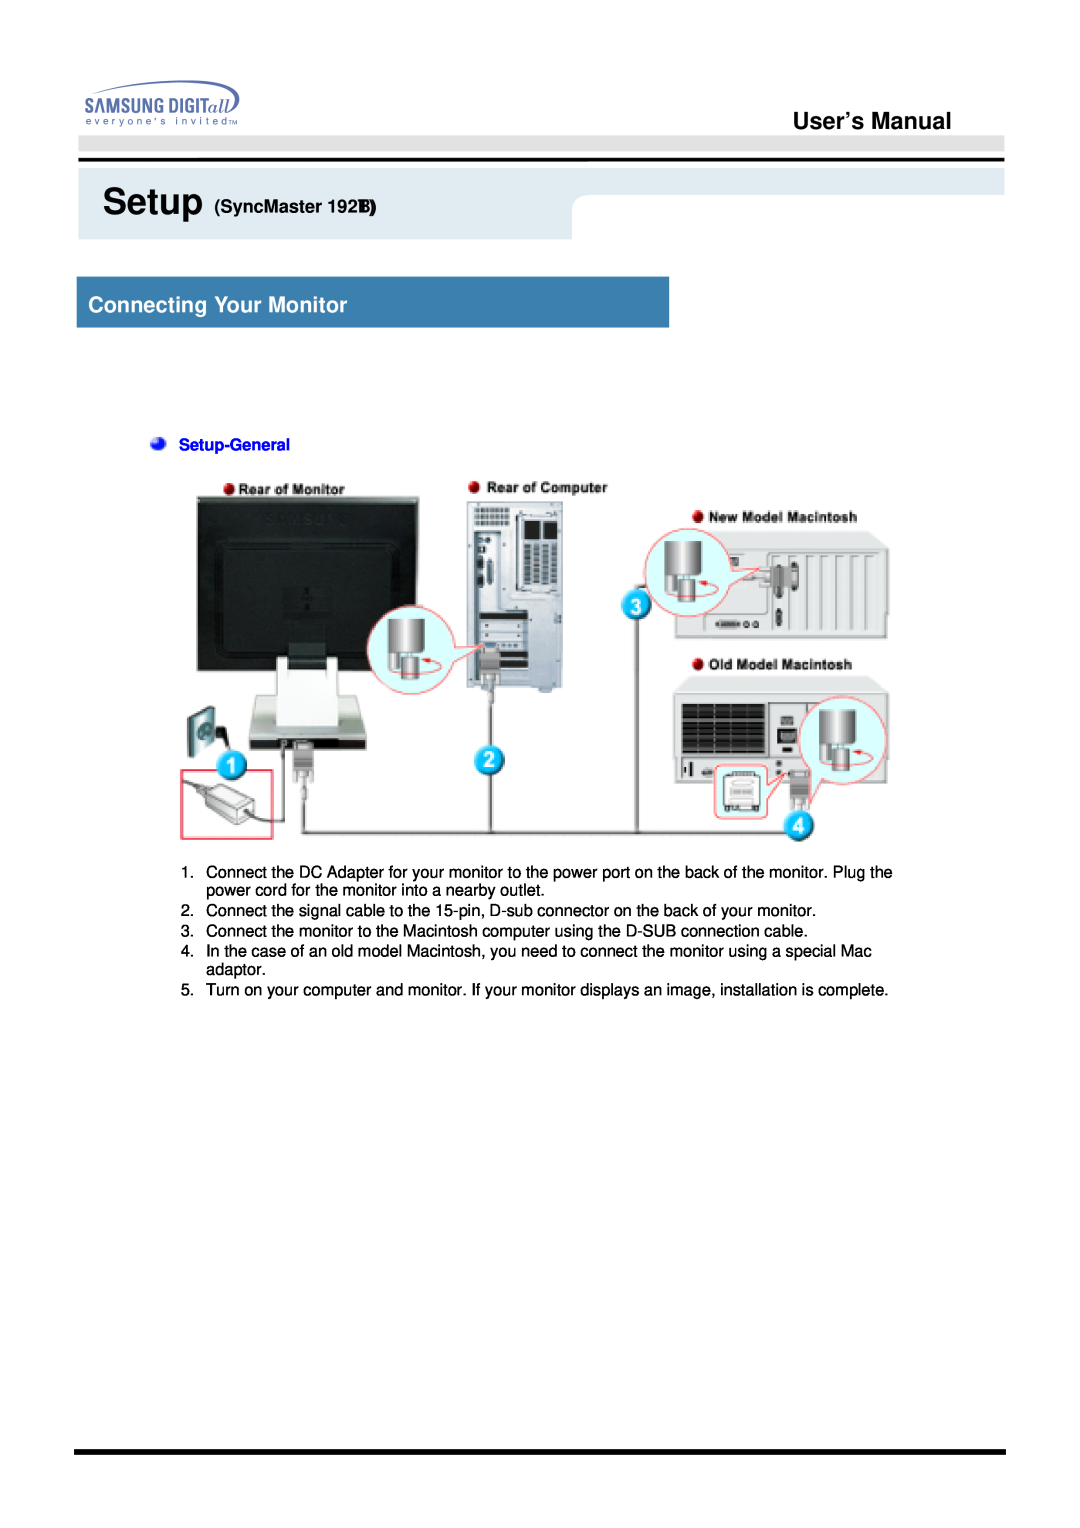 Samsung 192B manual Connecting Your Monitor, User’s Manual, Setup SyncMaster 192TB, Setup-General 